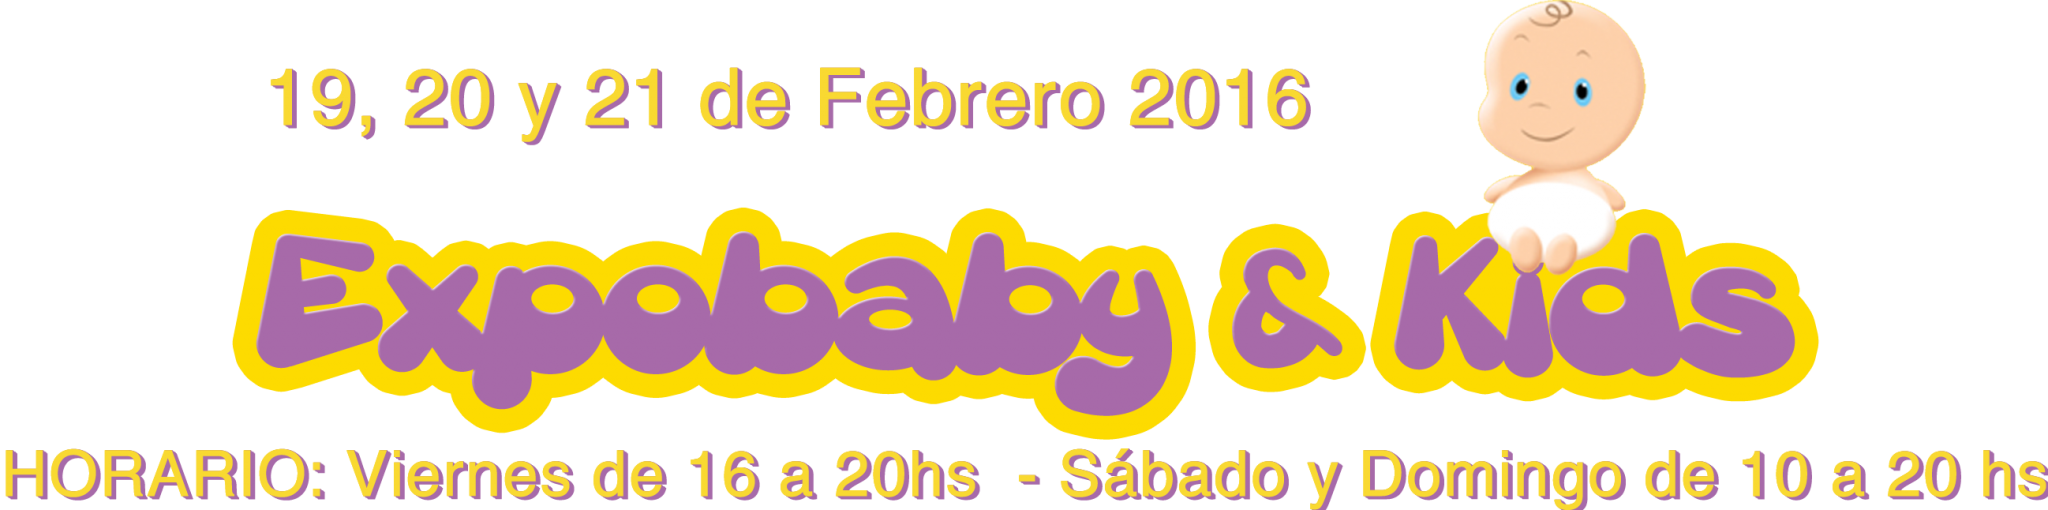 Expo Babys&Kids en BEC. Talleres infantiles, creativos y educativos. Bilbao